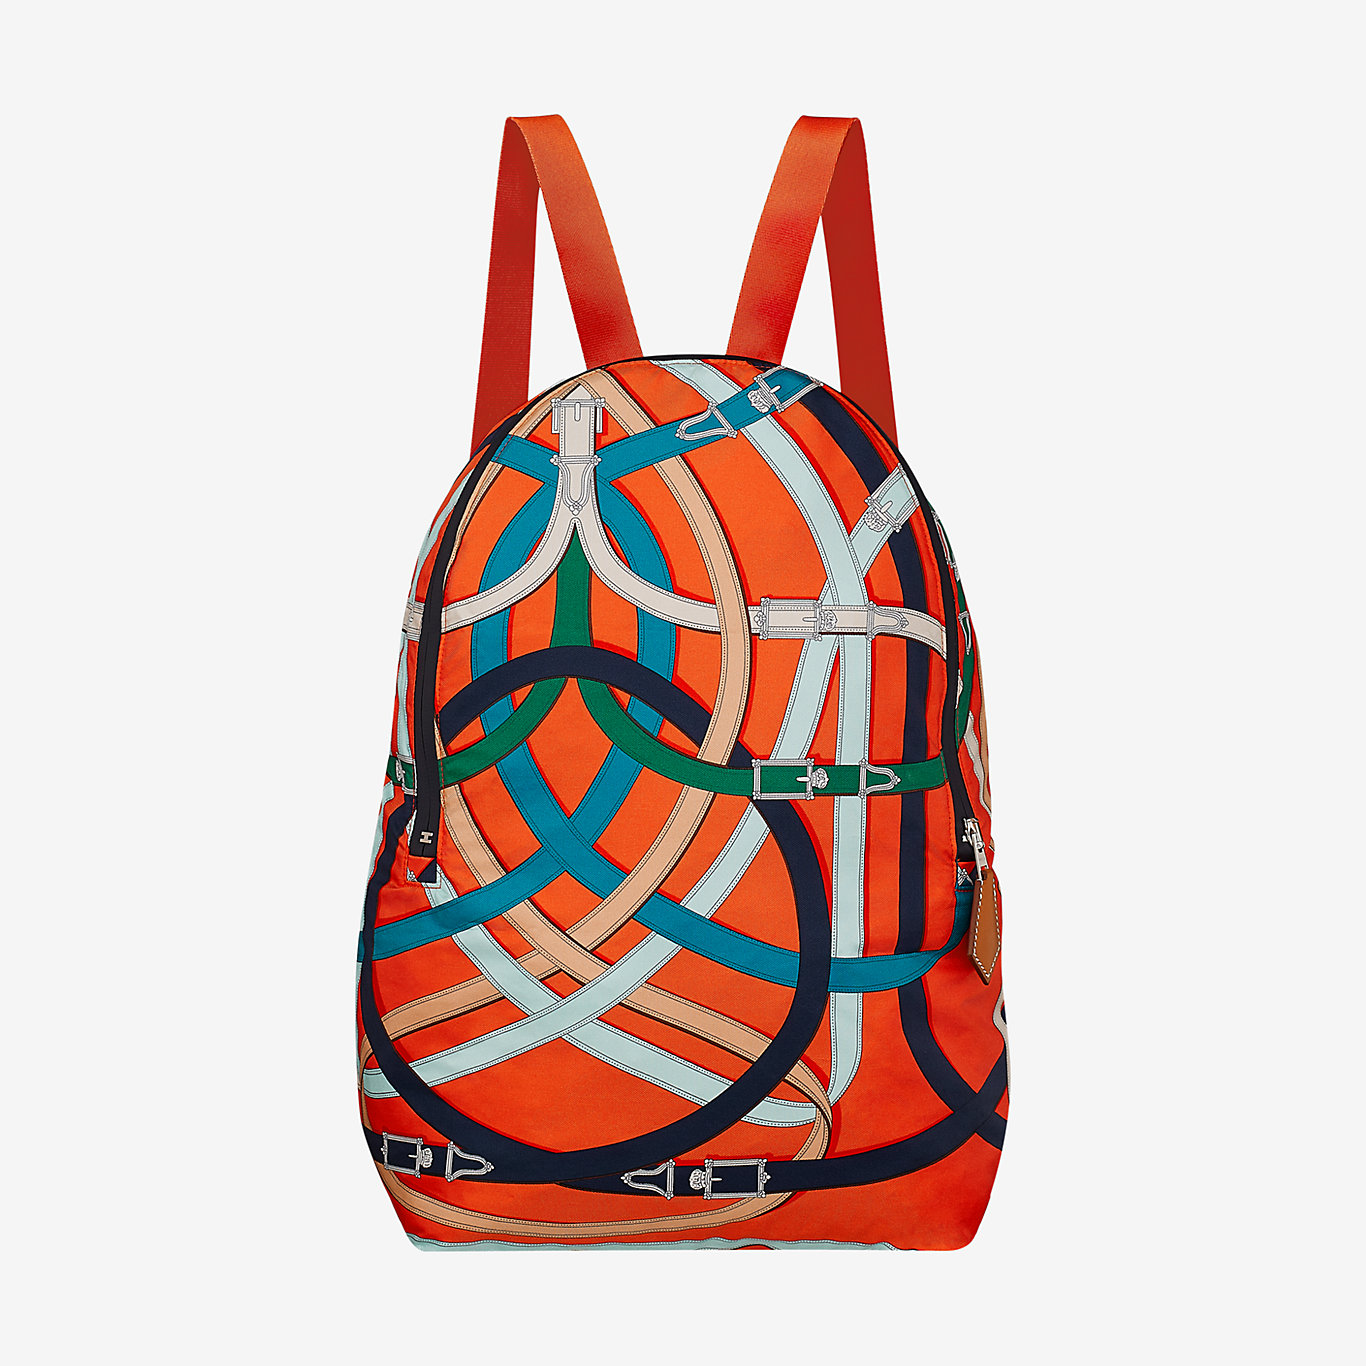 Airsilk backpack, medium model - front